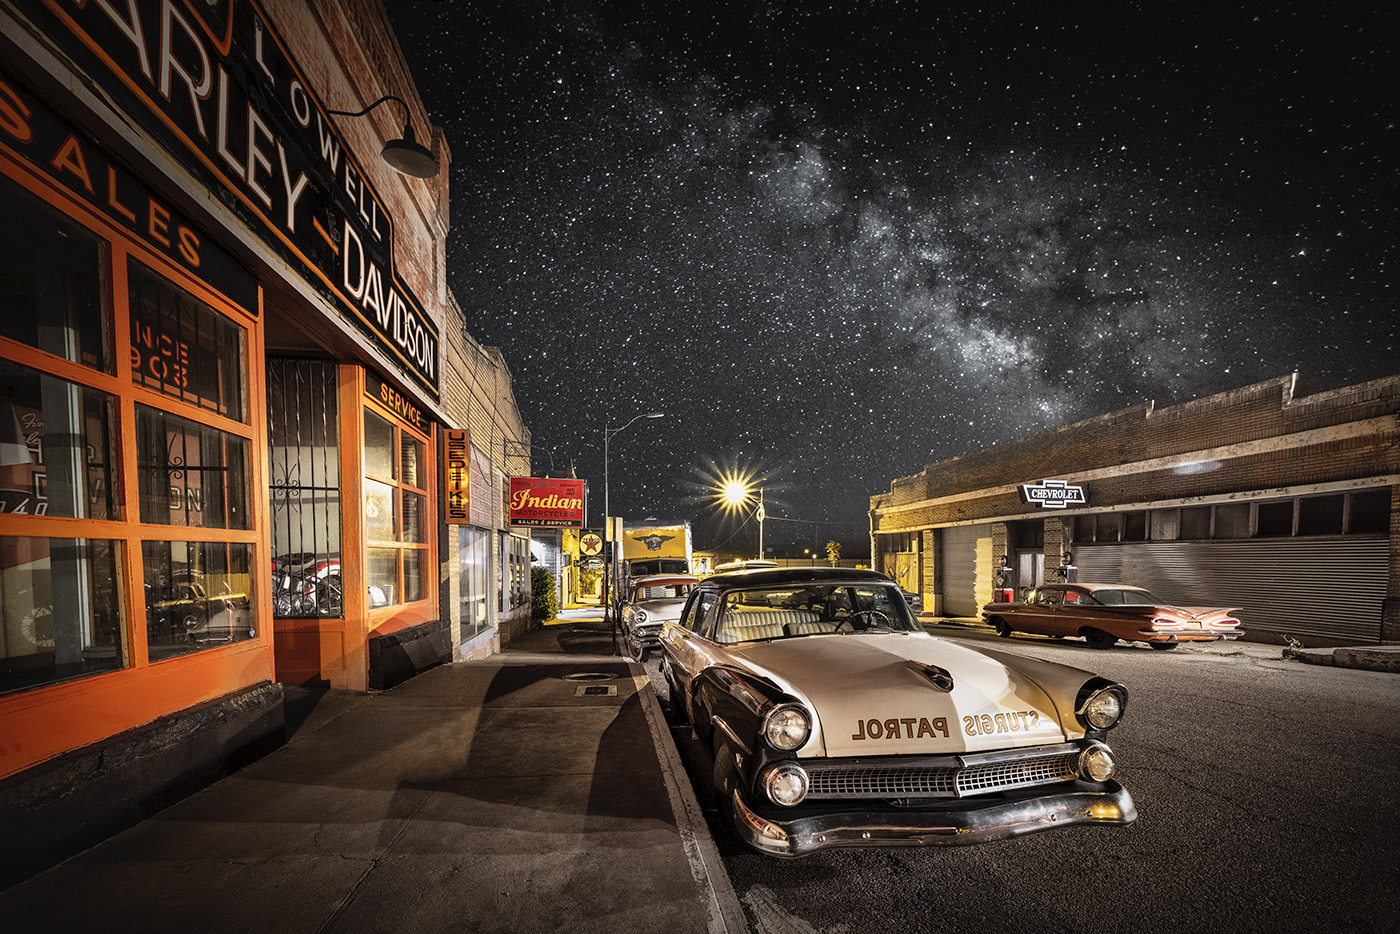 The Milky Way over old town Bisbee, Arizona